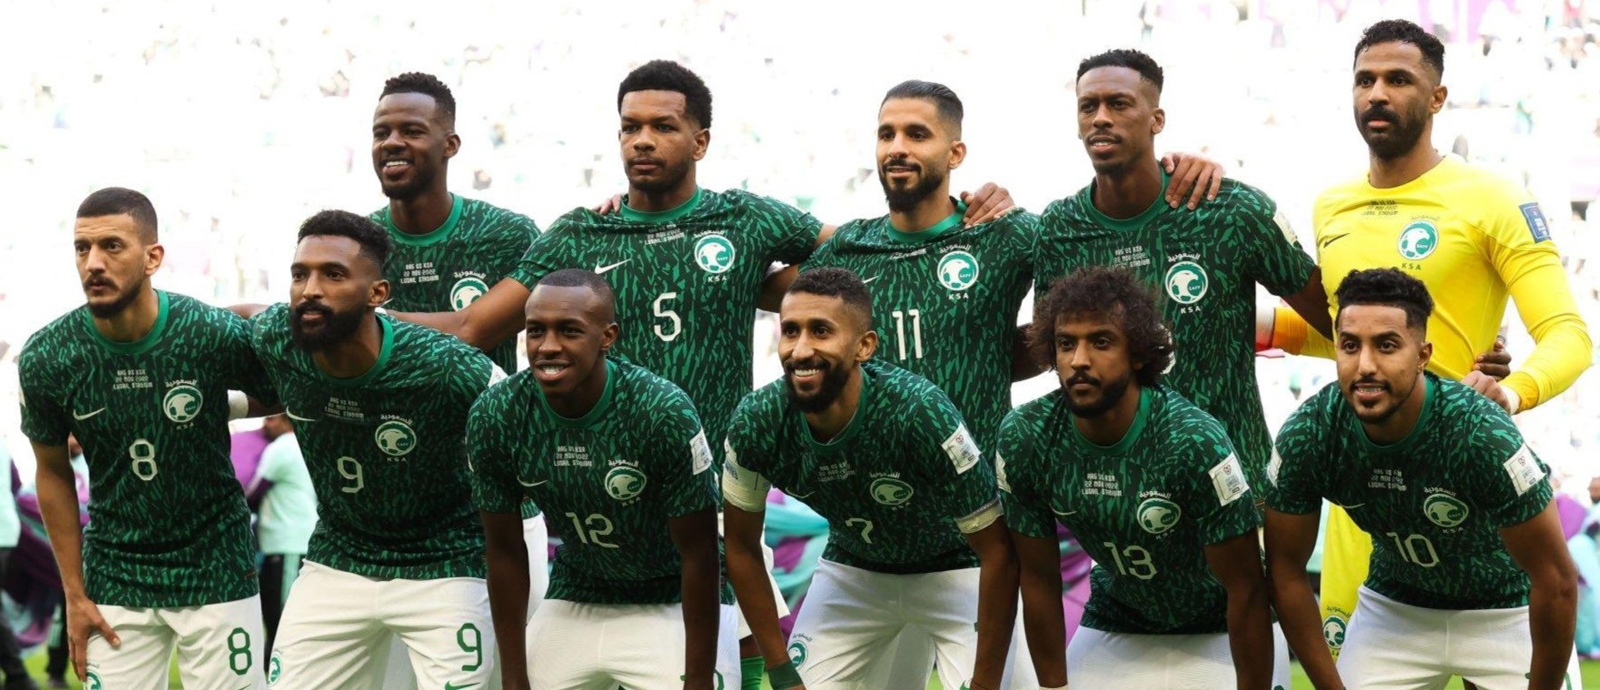 The national football team of Saudi Arabia